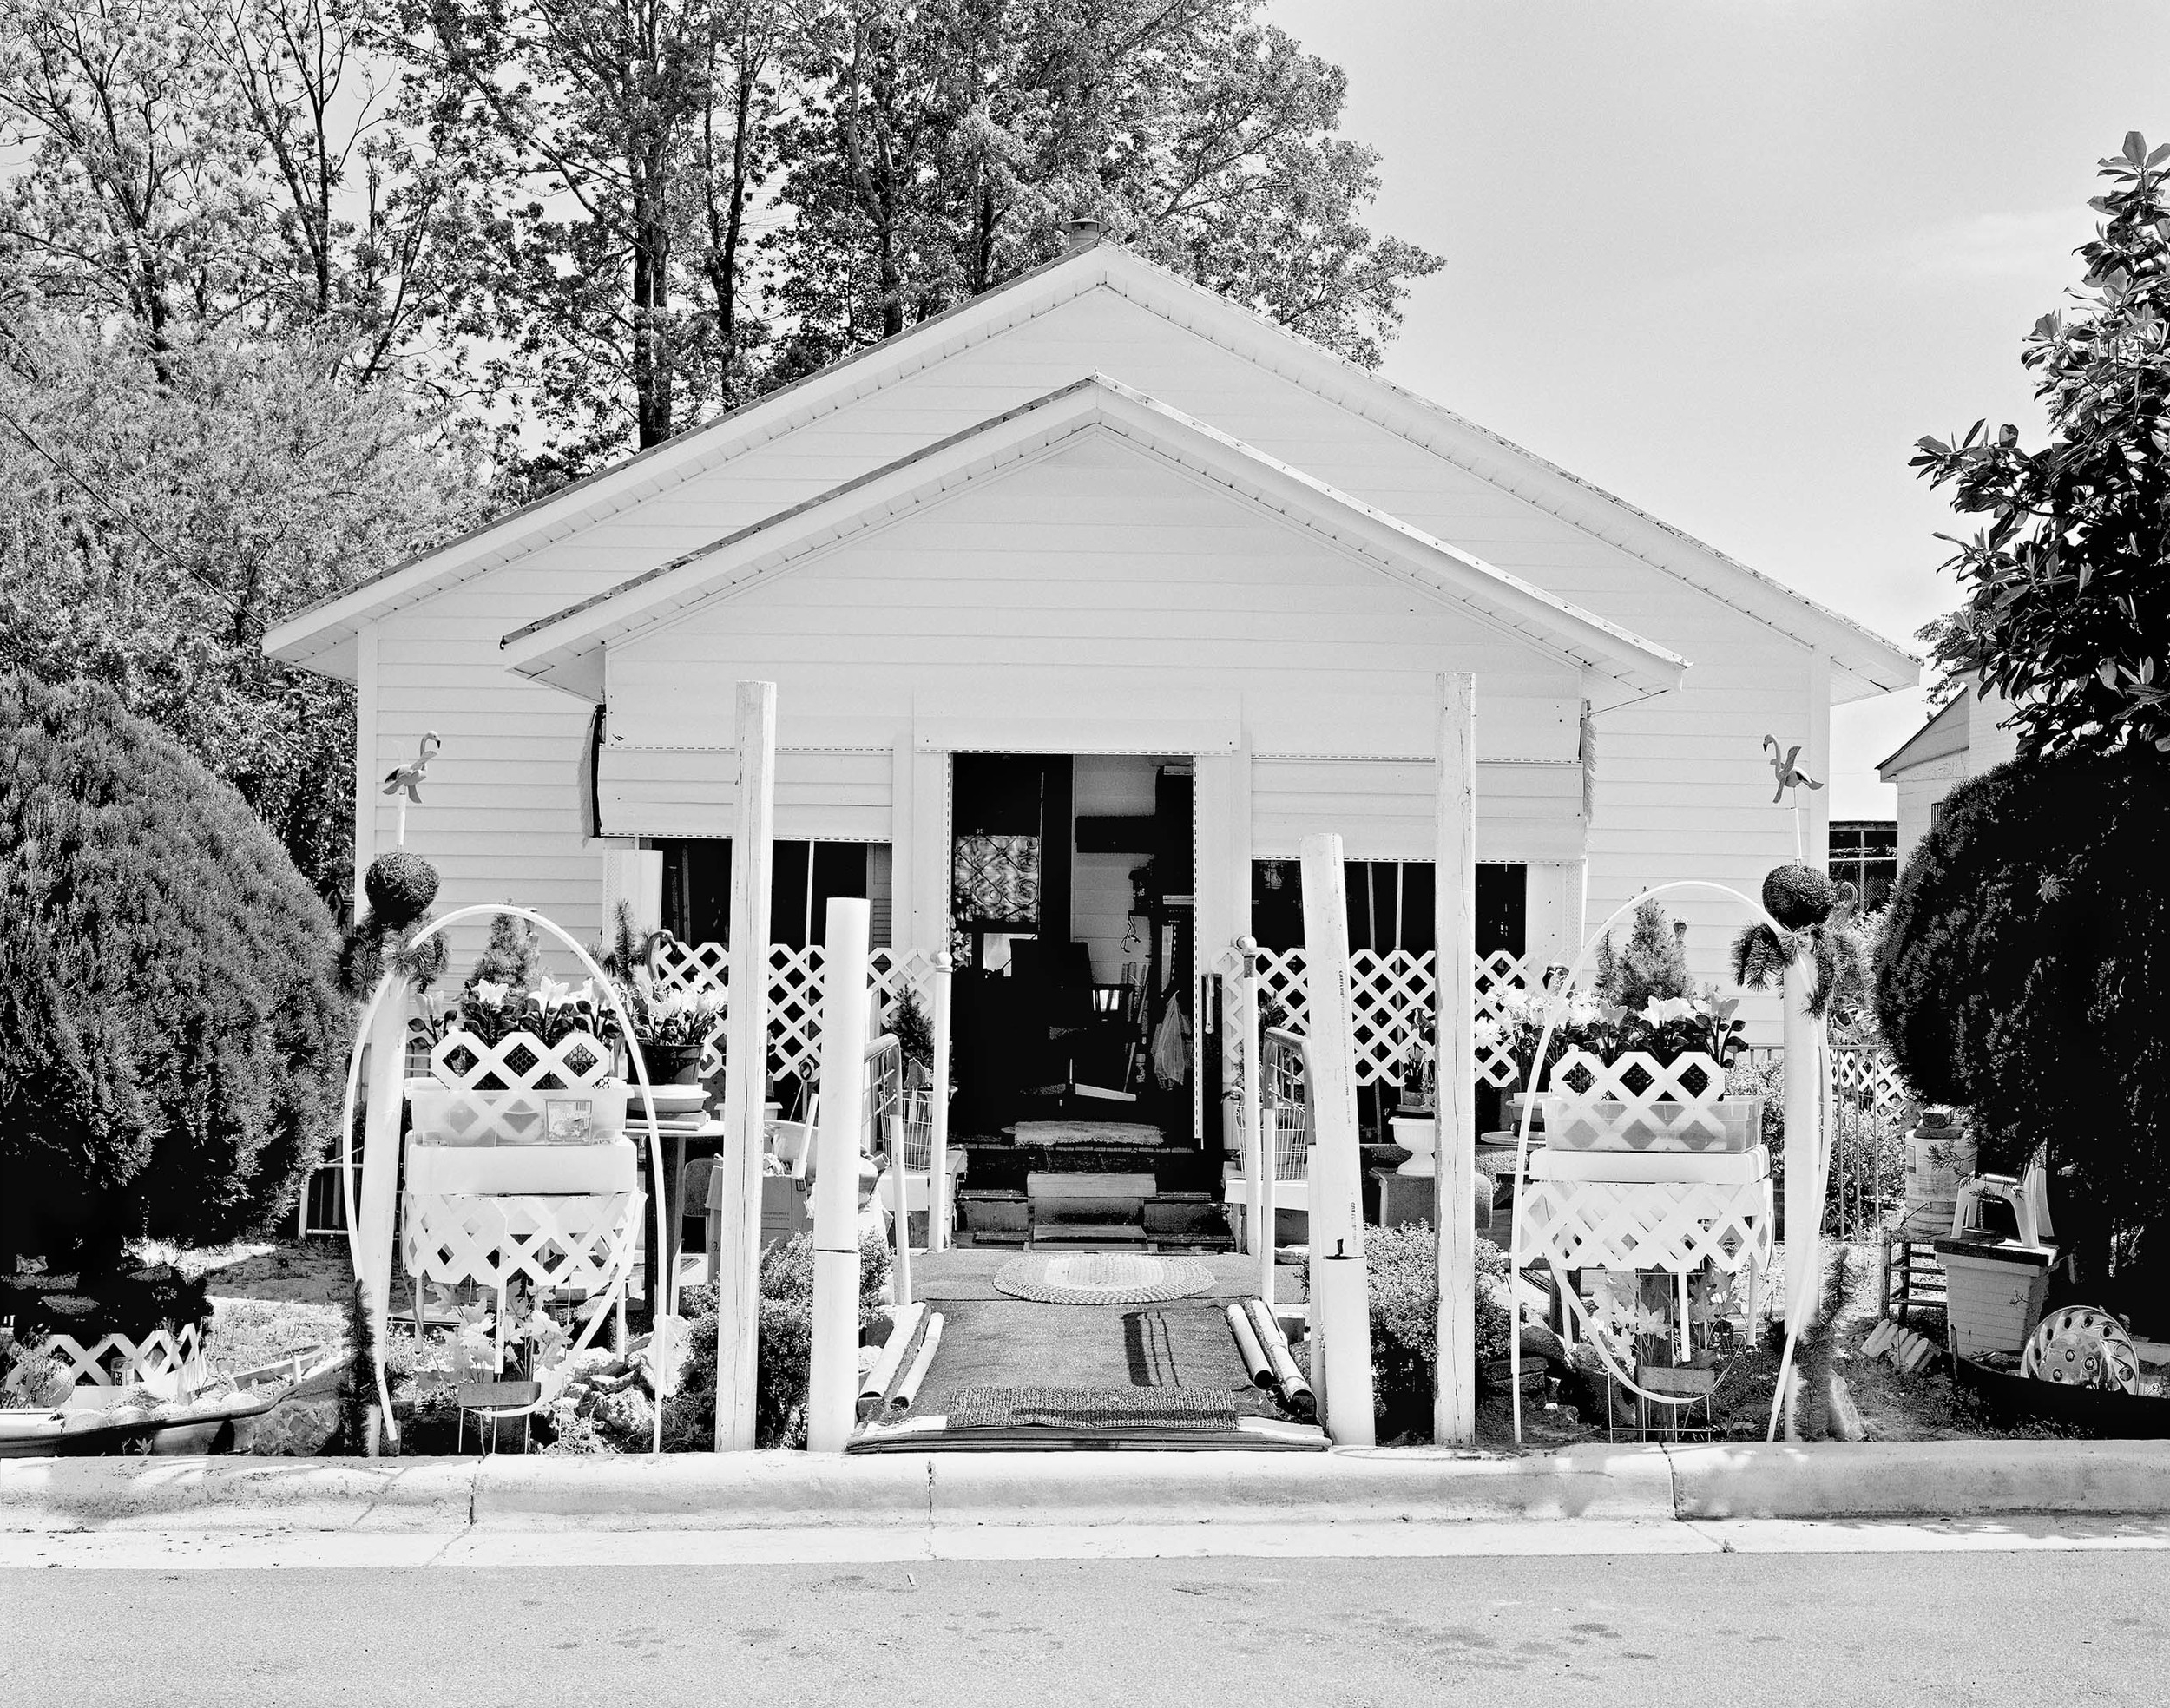  Louise Daniel's House and Garden, Greenville, North Carolina 